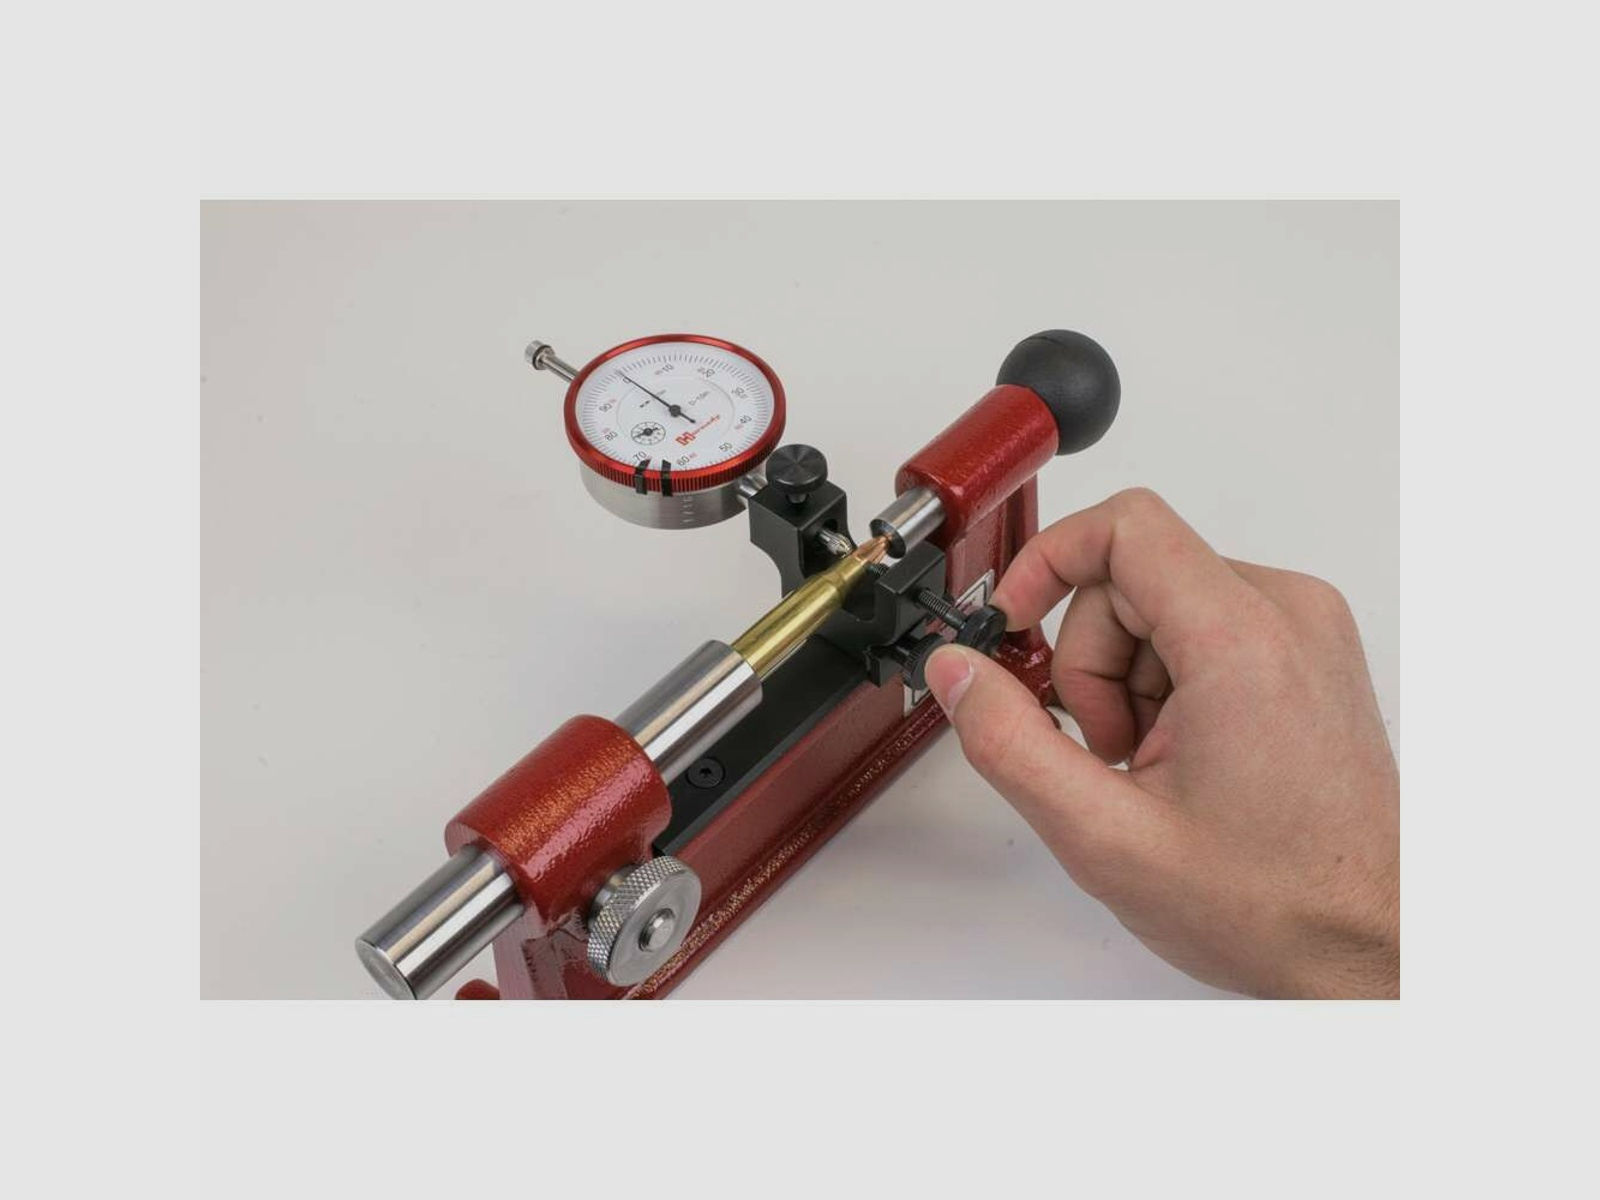 Hornady	 Lock-N-Load® Precision Reloaders Kit Item #095150